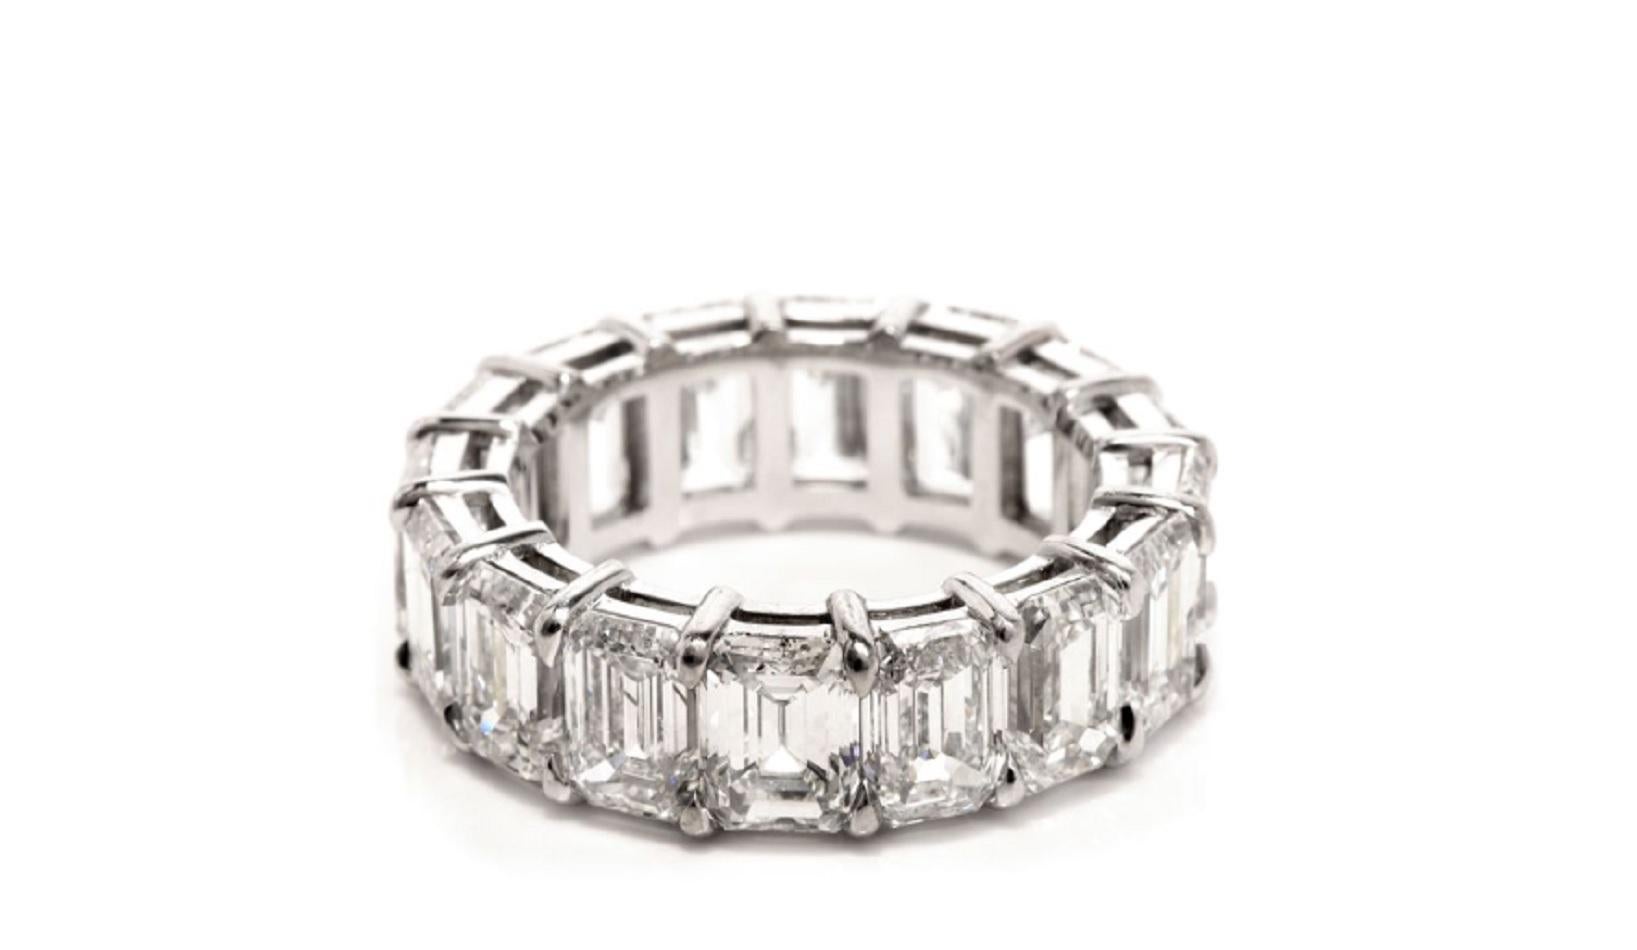 7 stone emerald cut diamond ring